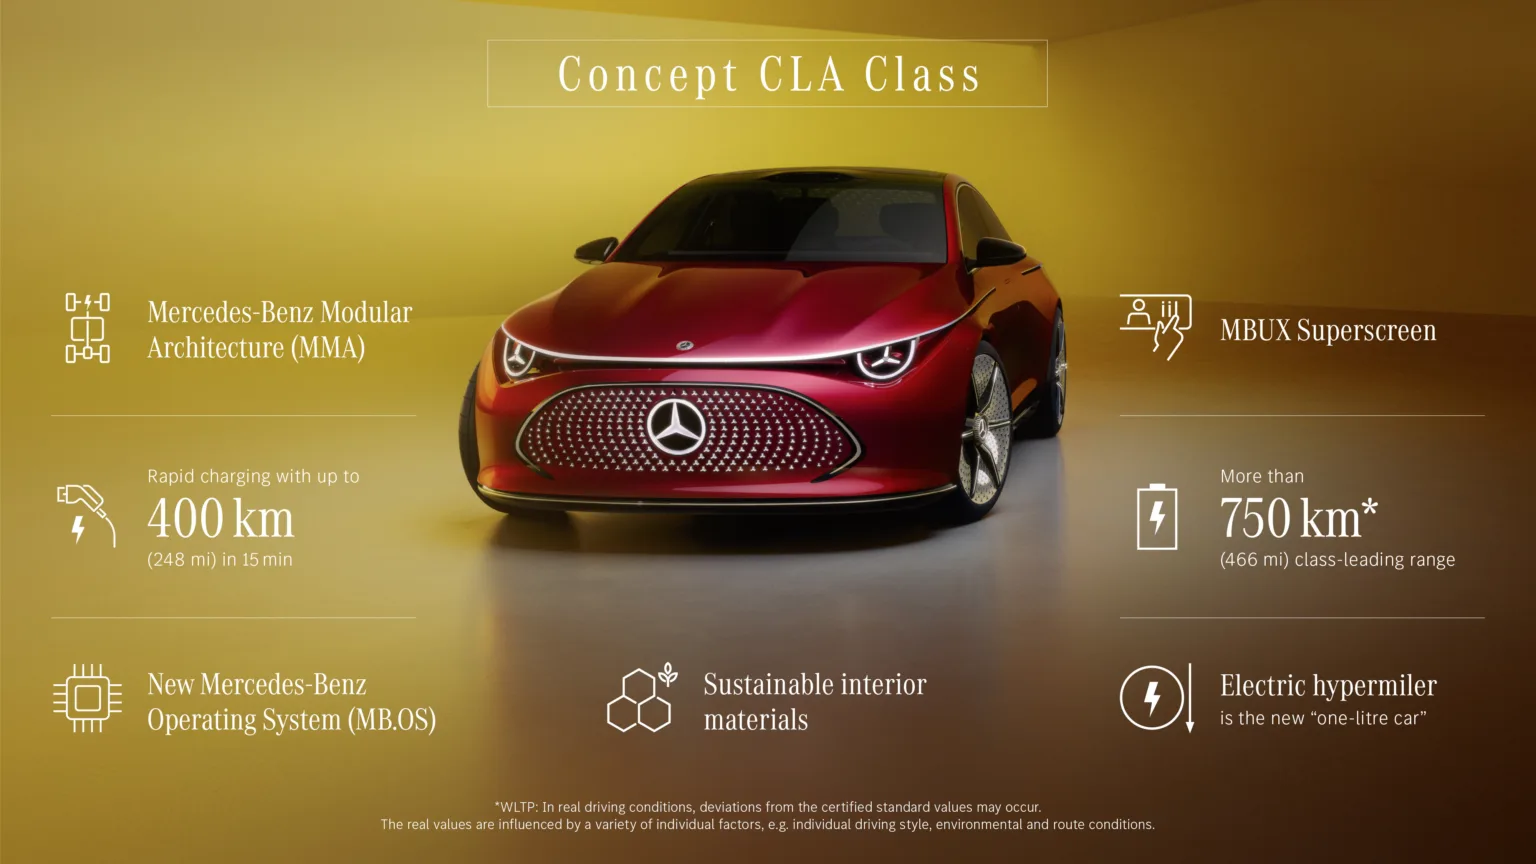 Mercedes-Benz Concept CLA Class Exterior Image 35